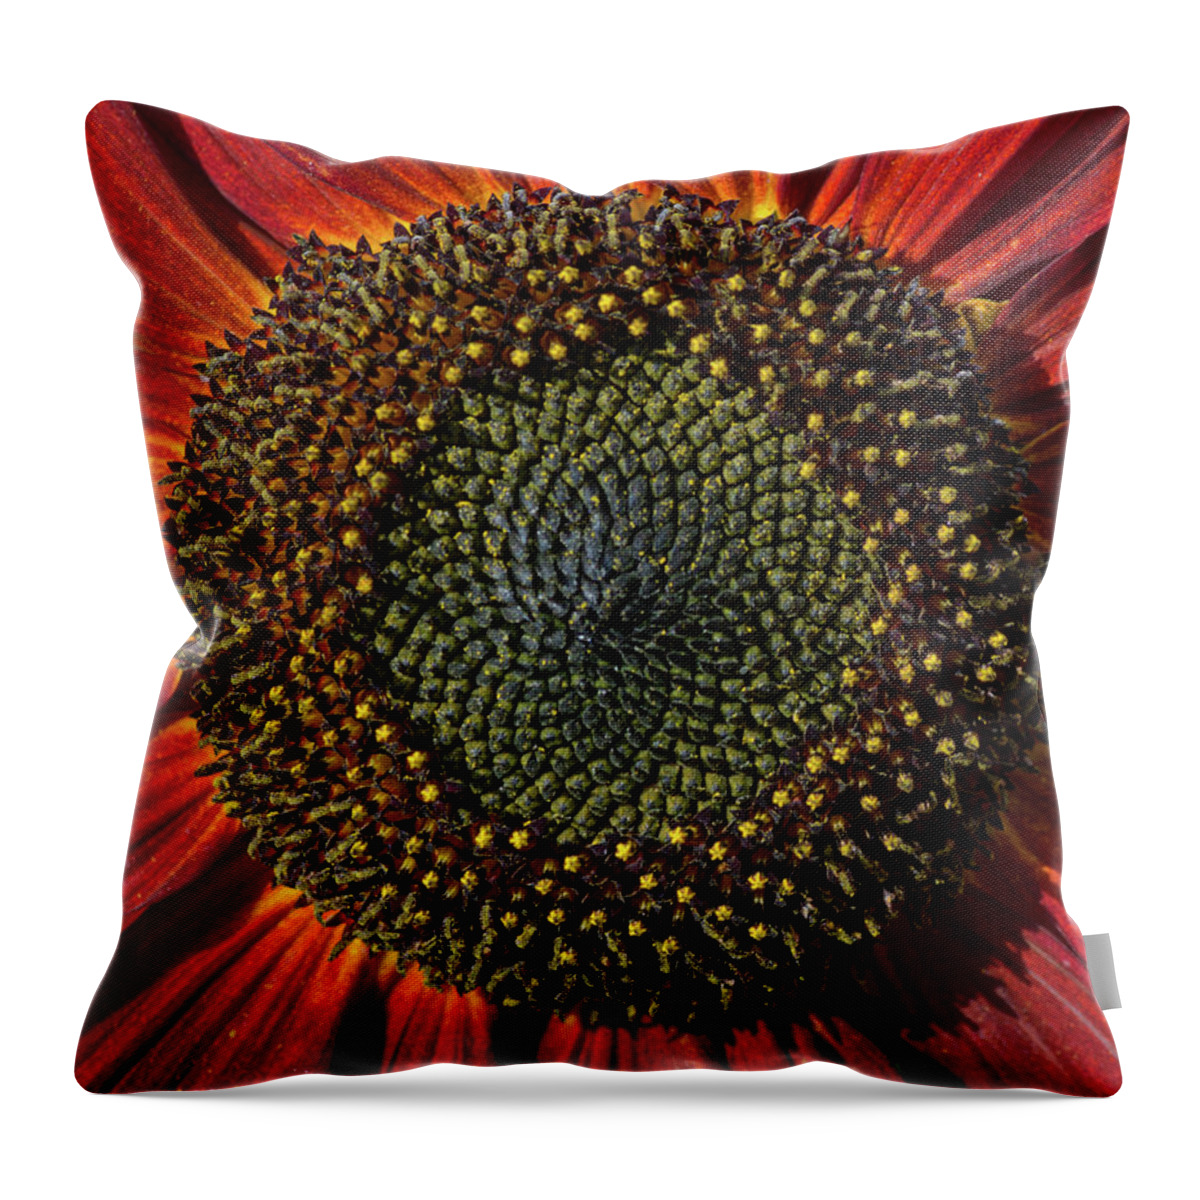 Sunflower Throw Pillow featuring the photograph Single Sun flower by Pete Hemington